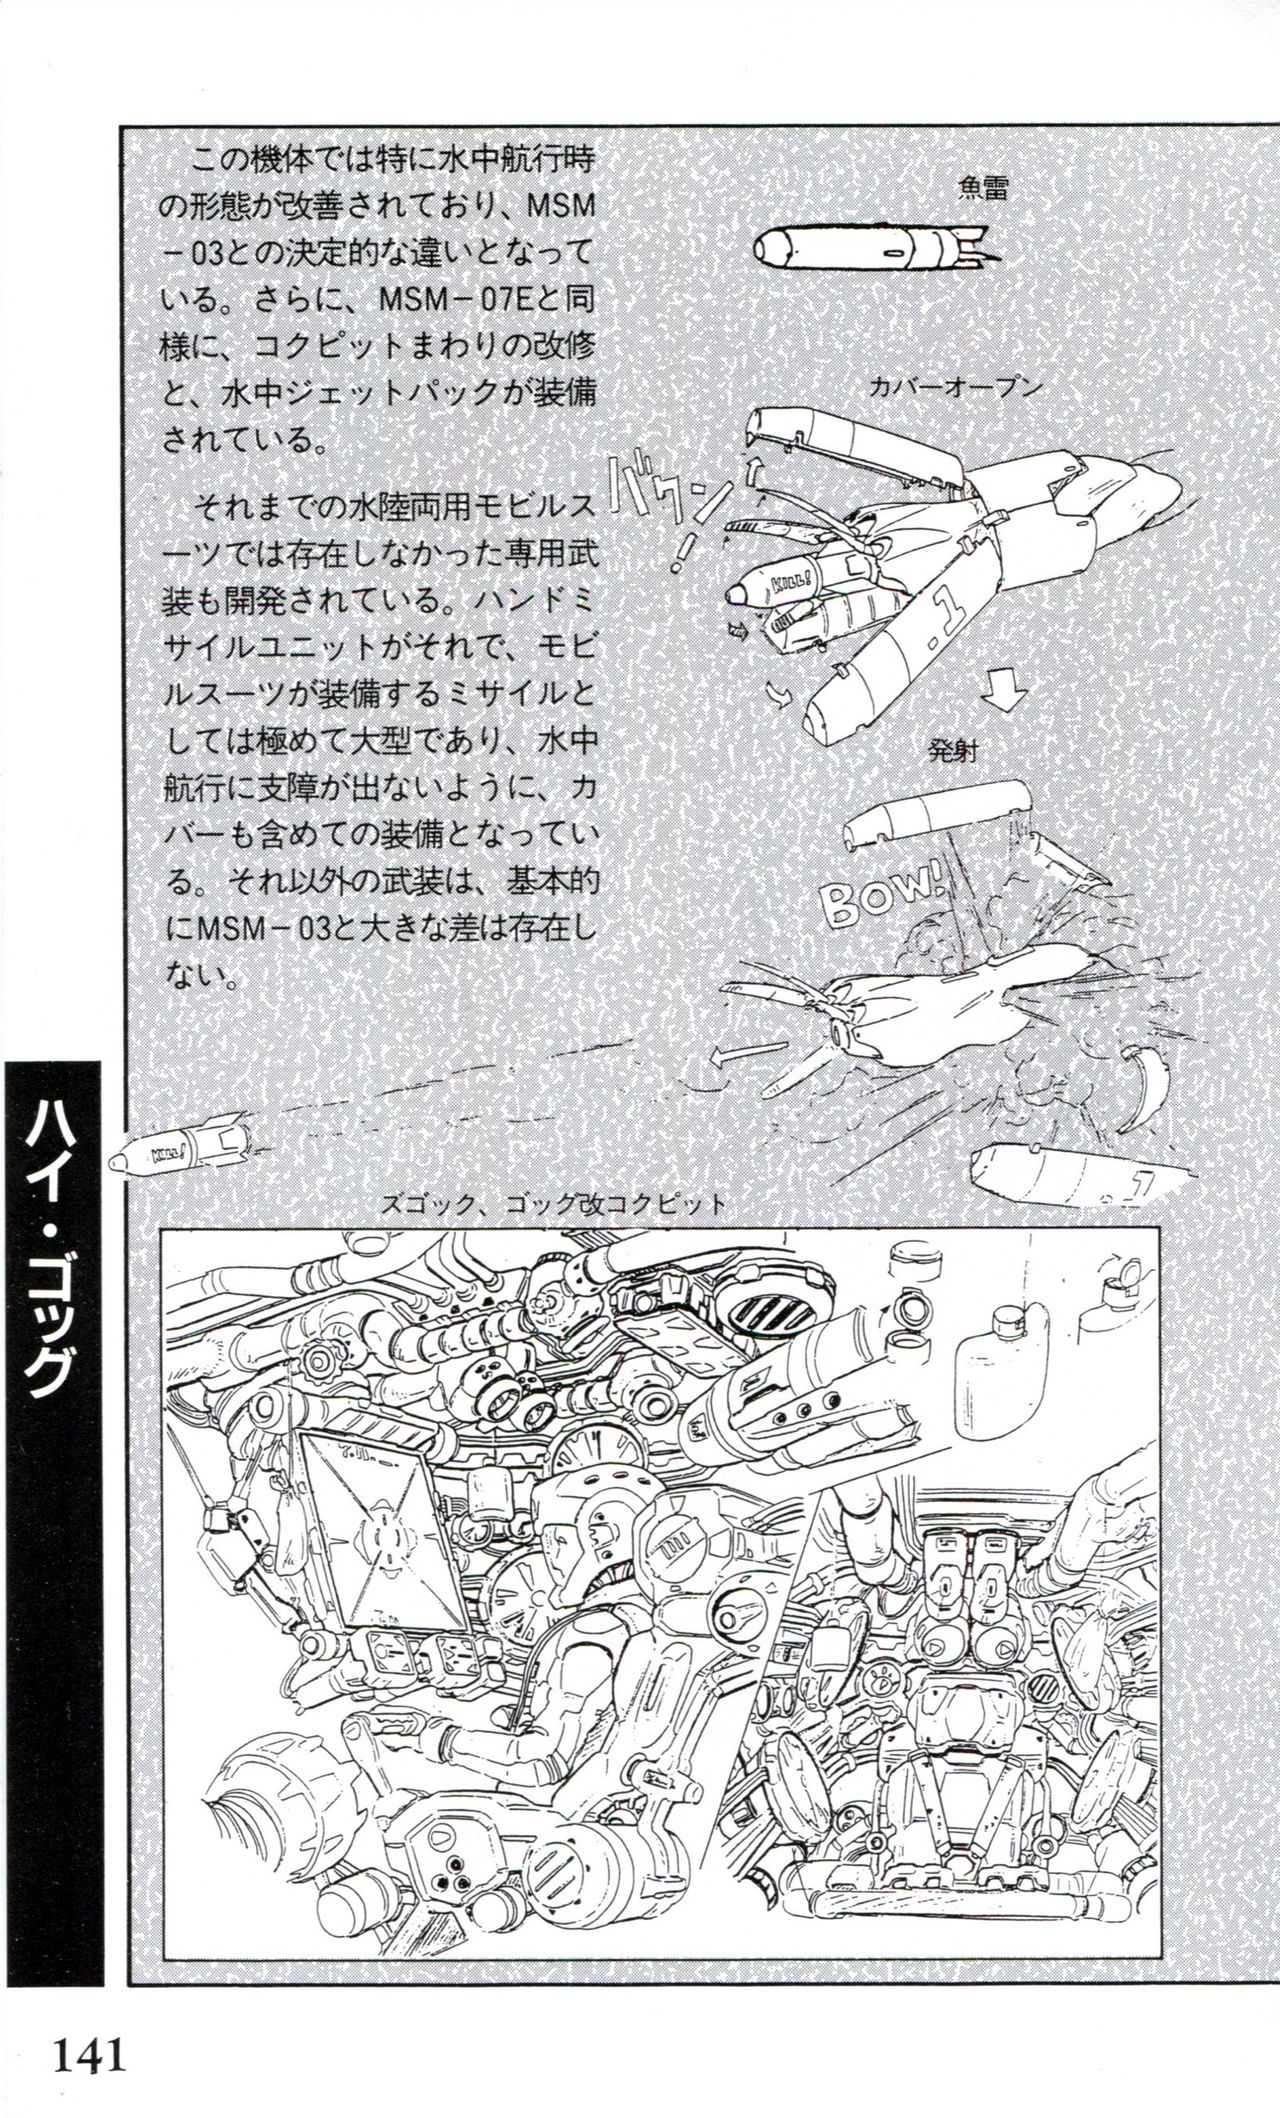 Mobile Suit Gundam U.C. Box MS Gundam Encyclopedia NO.01 - Mobile Suit Gundam 140